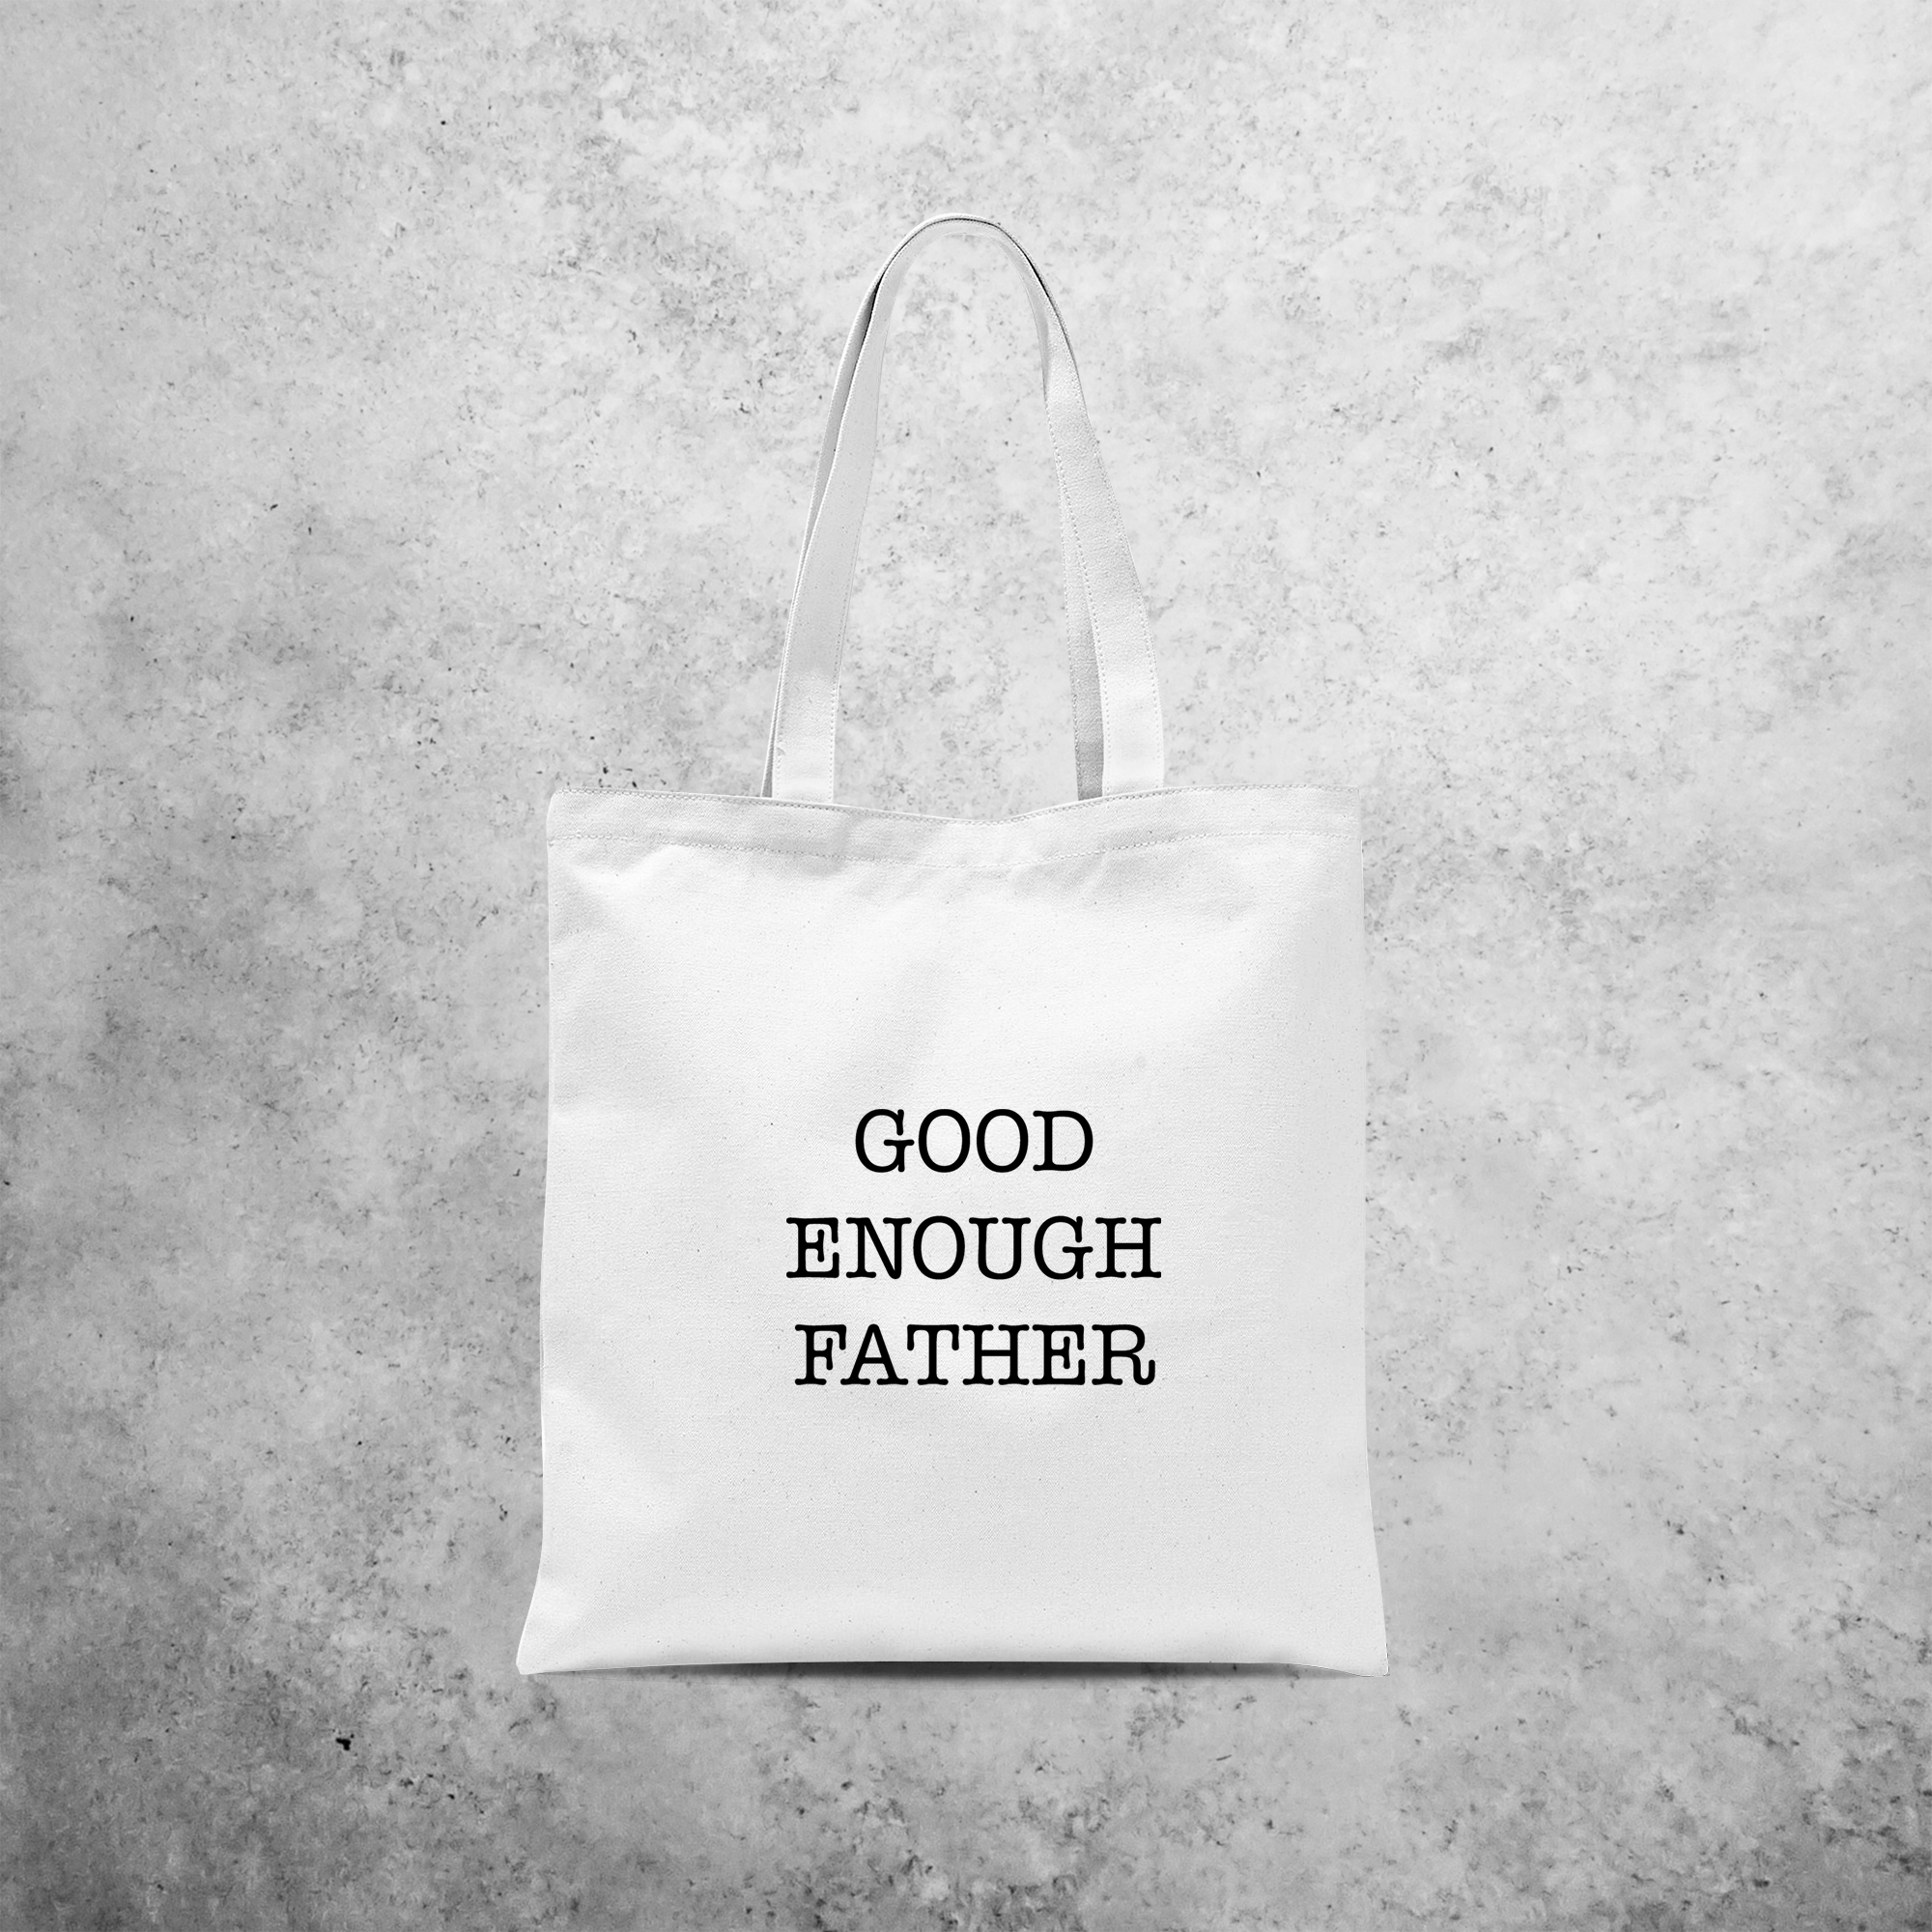 'Good enough father' tote bag